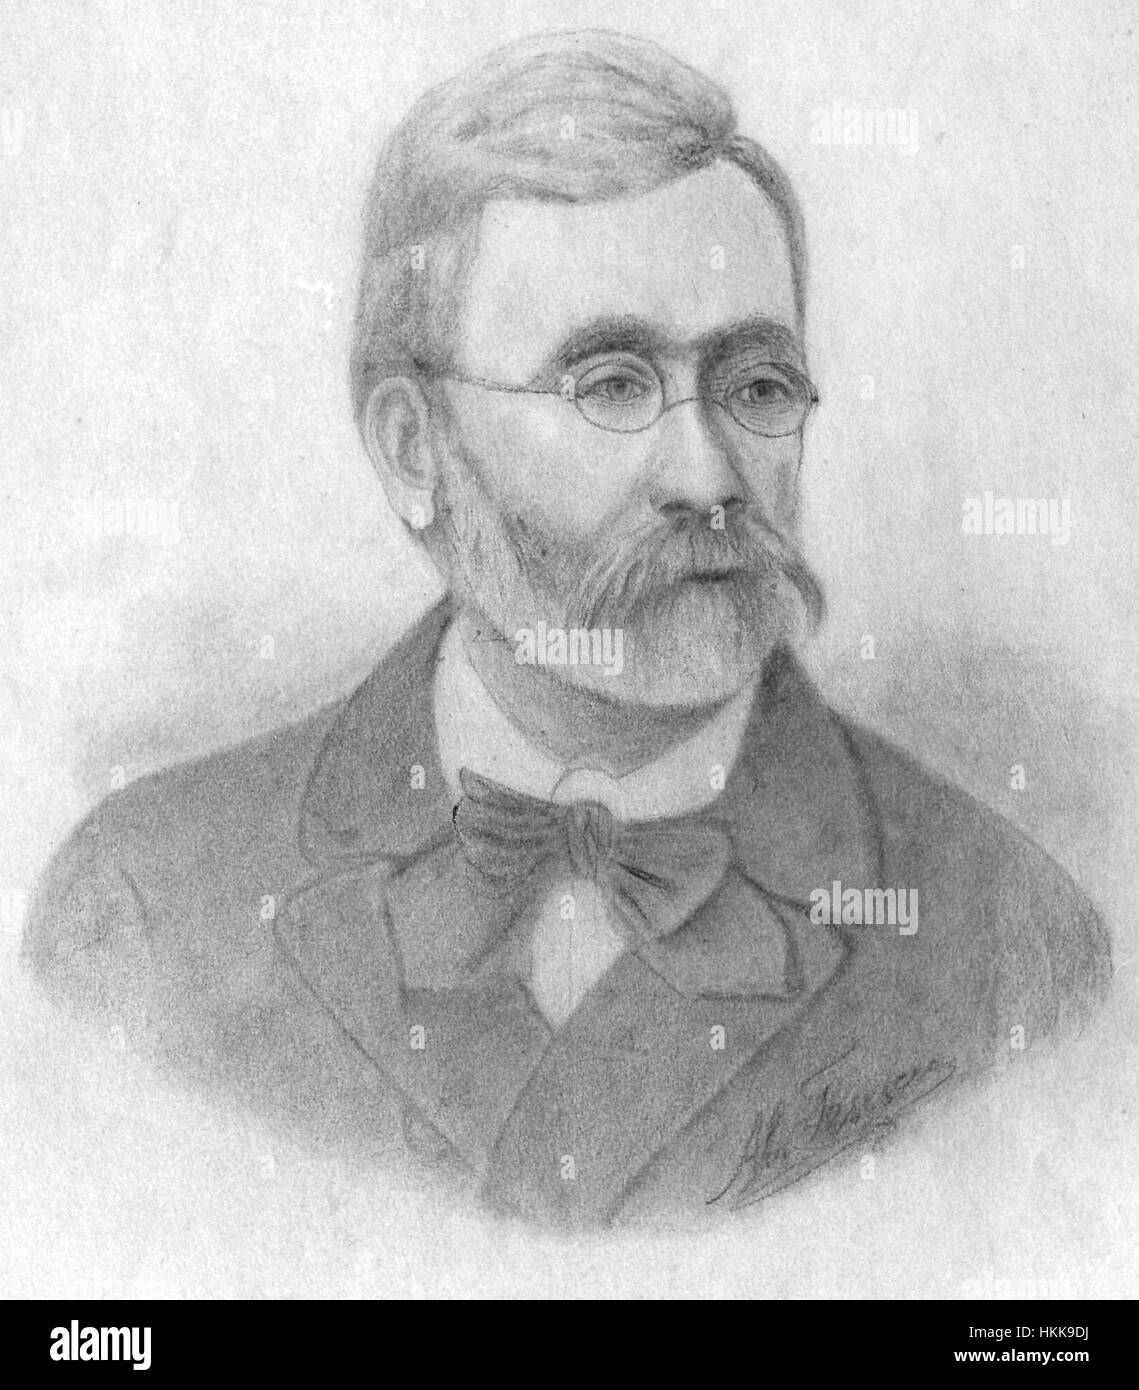 Alexandru Tesescu - V. A. Urechia, c. 1890 Stock Photo - Alamy